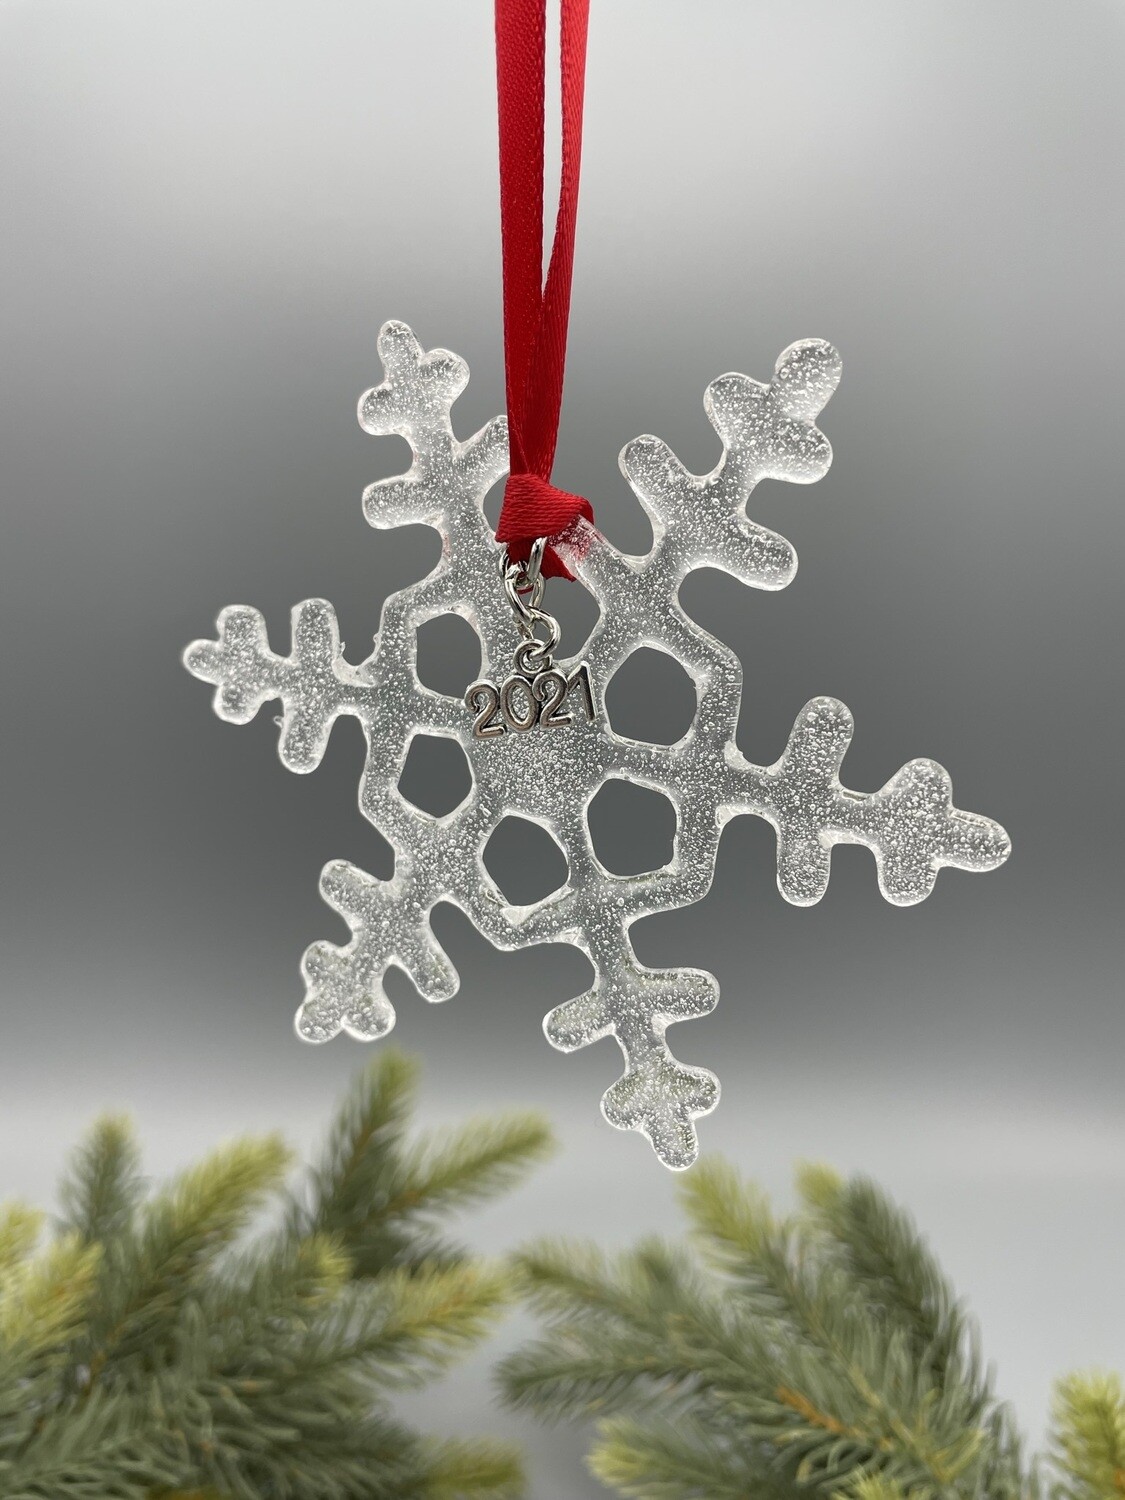 OPTION C: Icy Snowflake Ornaments or Suncatchers